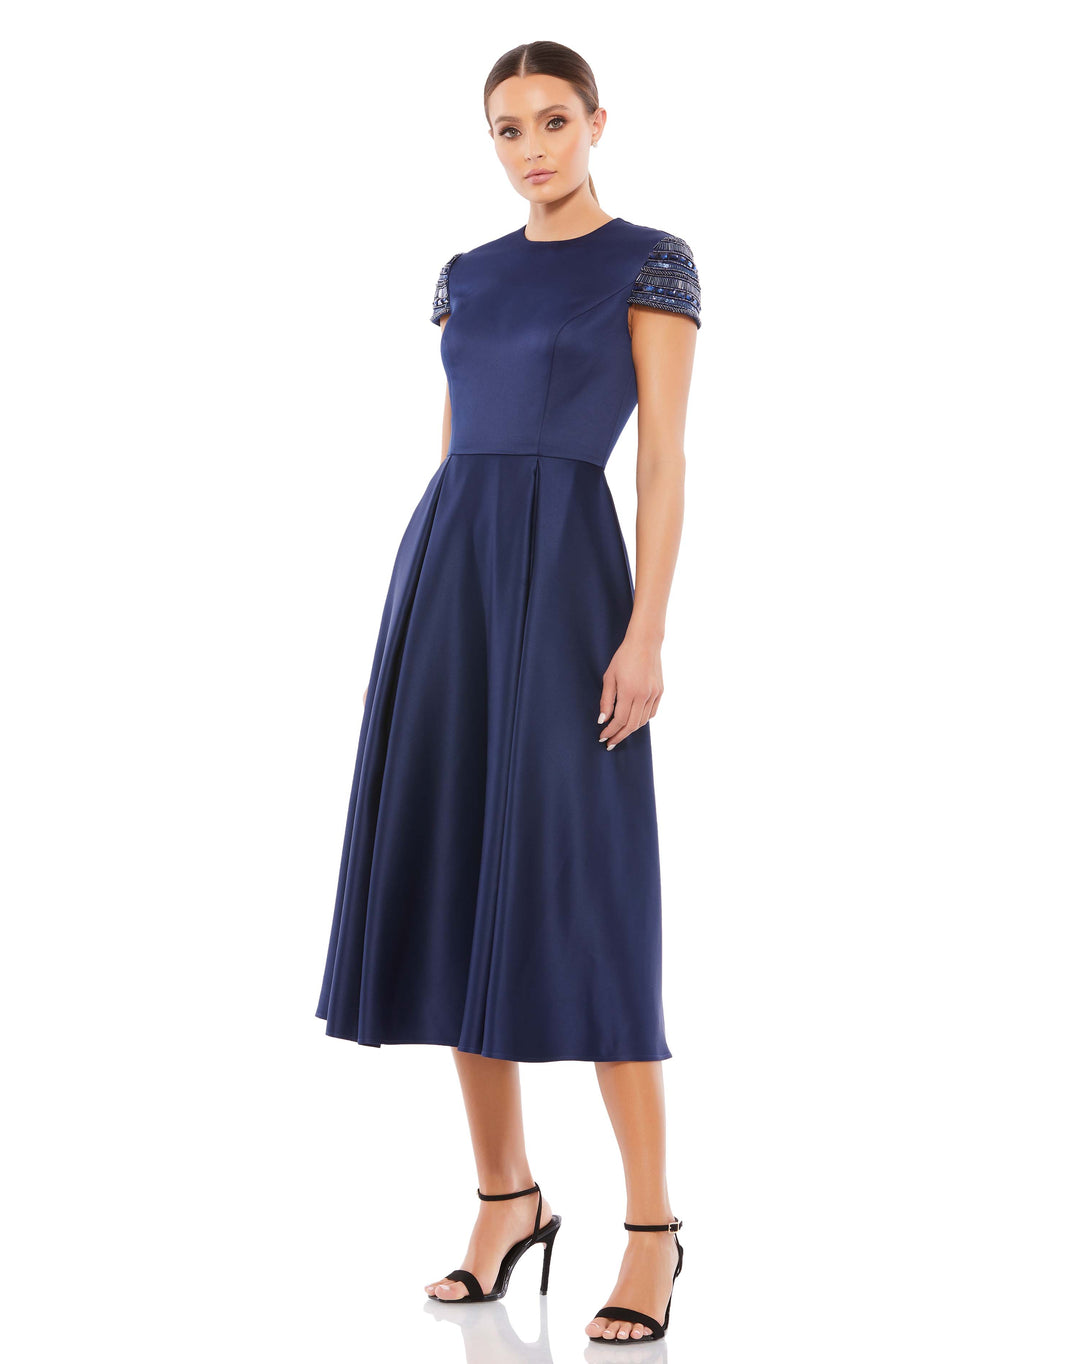 High Neck Cap Sleeve Tea Length Dress – Mac Duggal